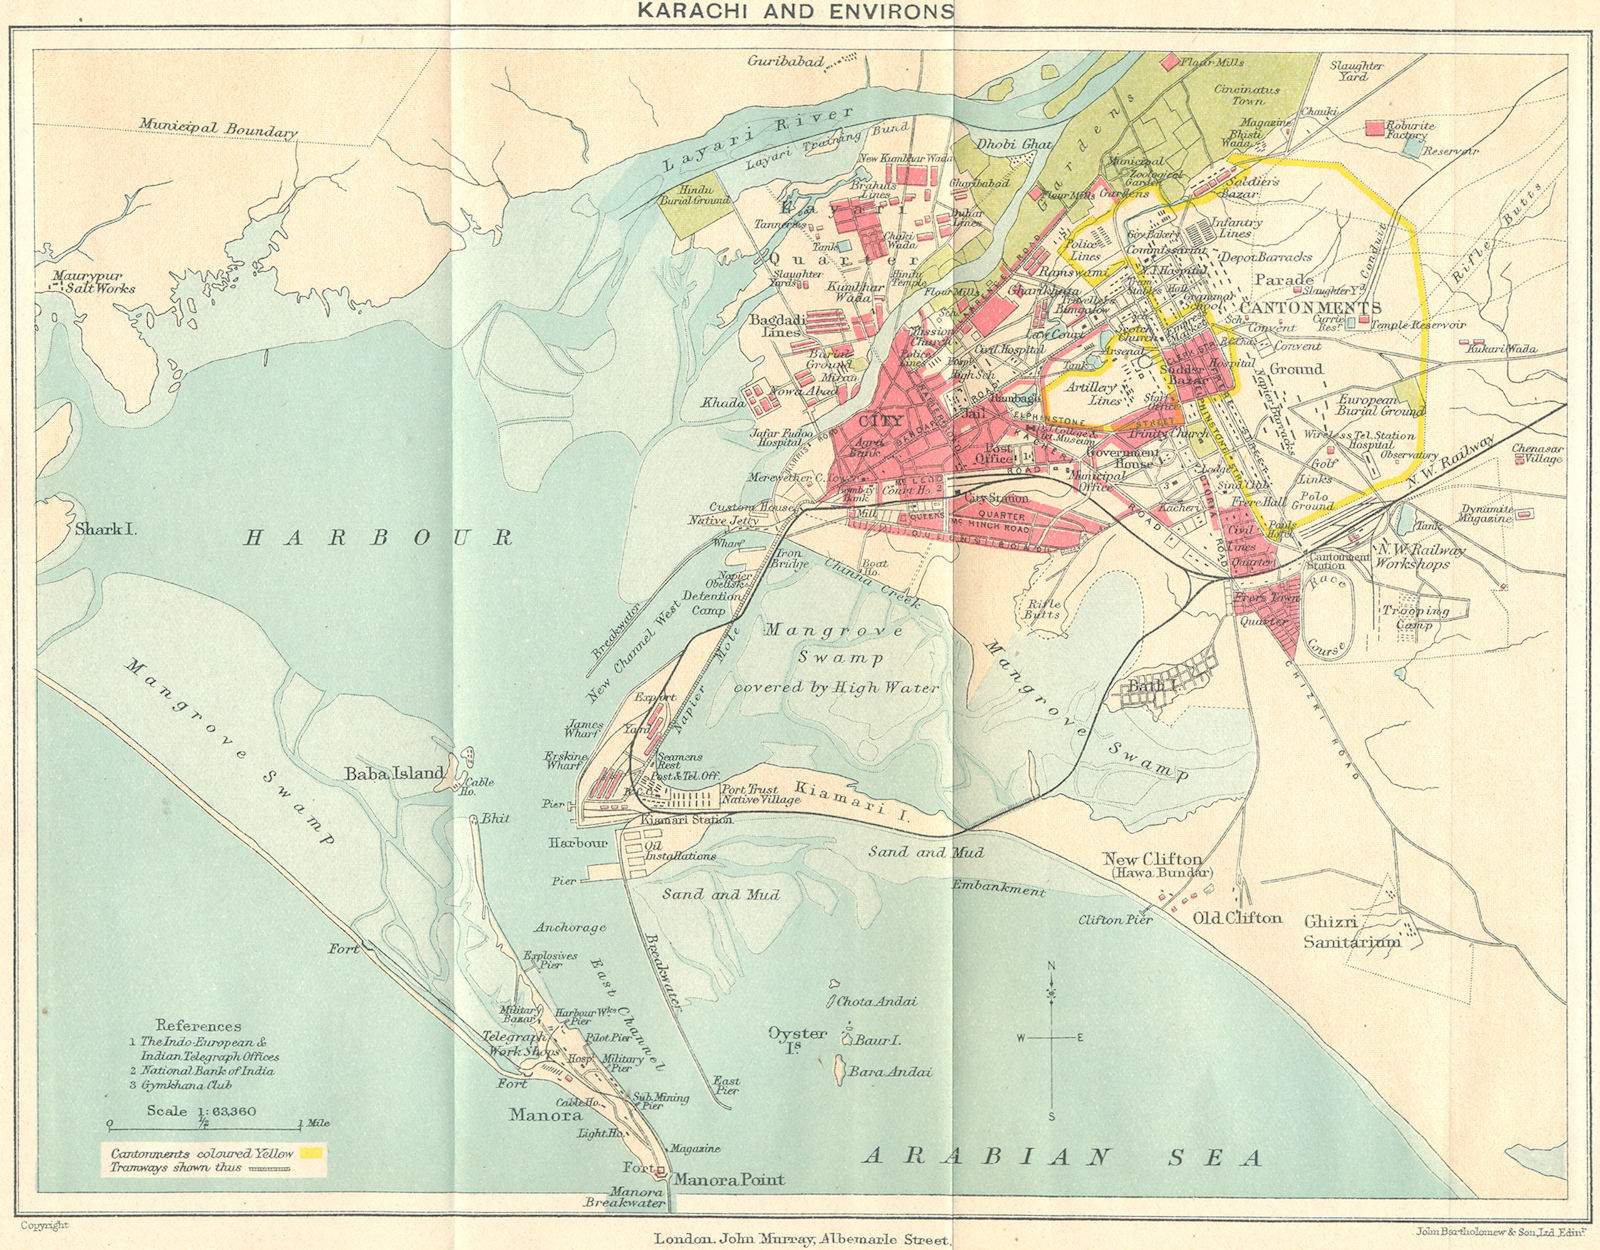 PAKISTAN. Karachi & environs city plan. Cantonment. British India 1924 old map